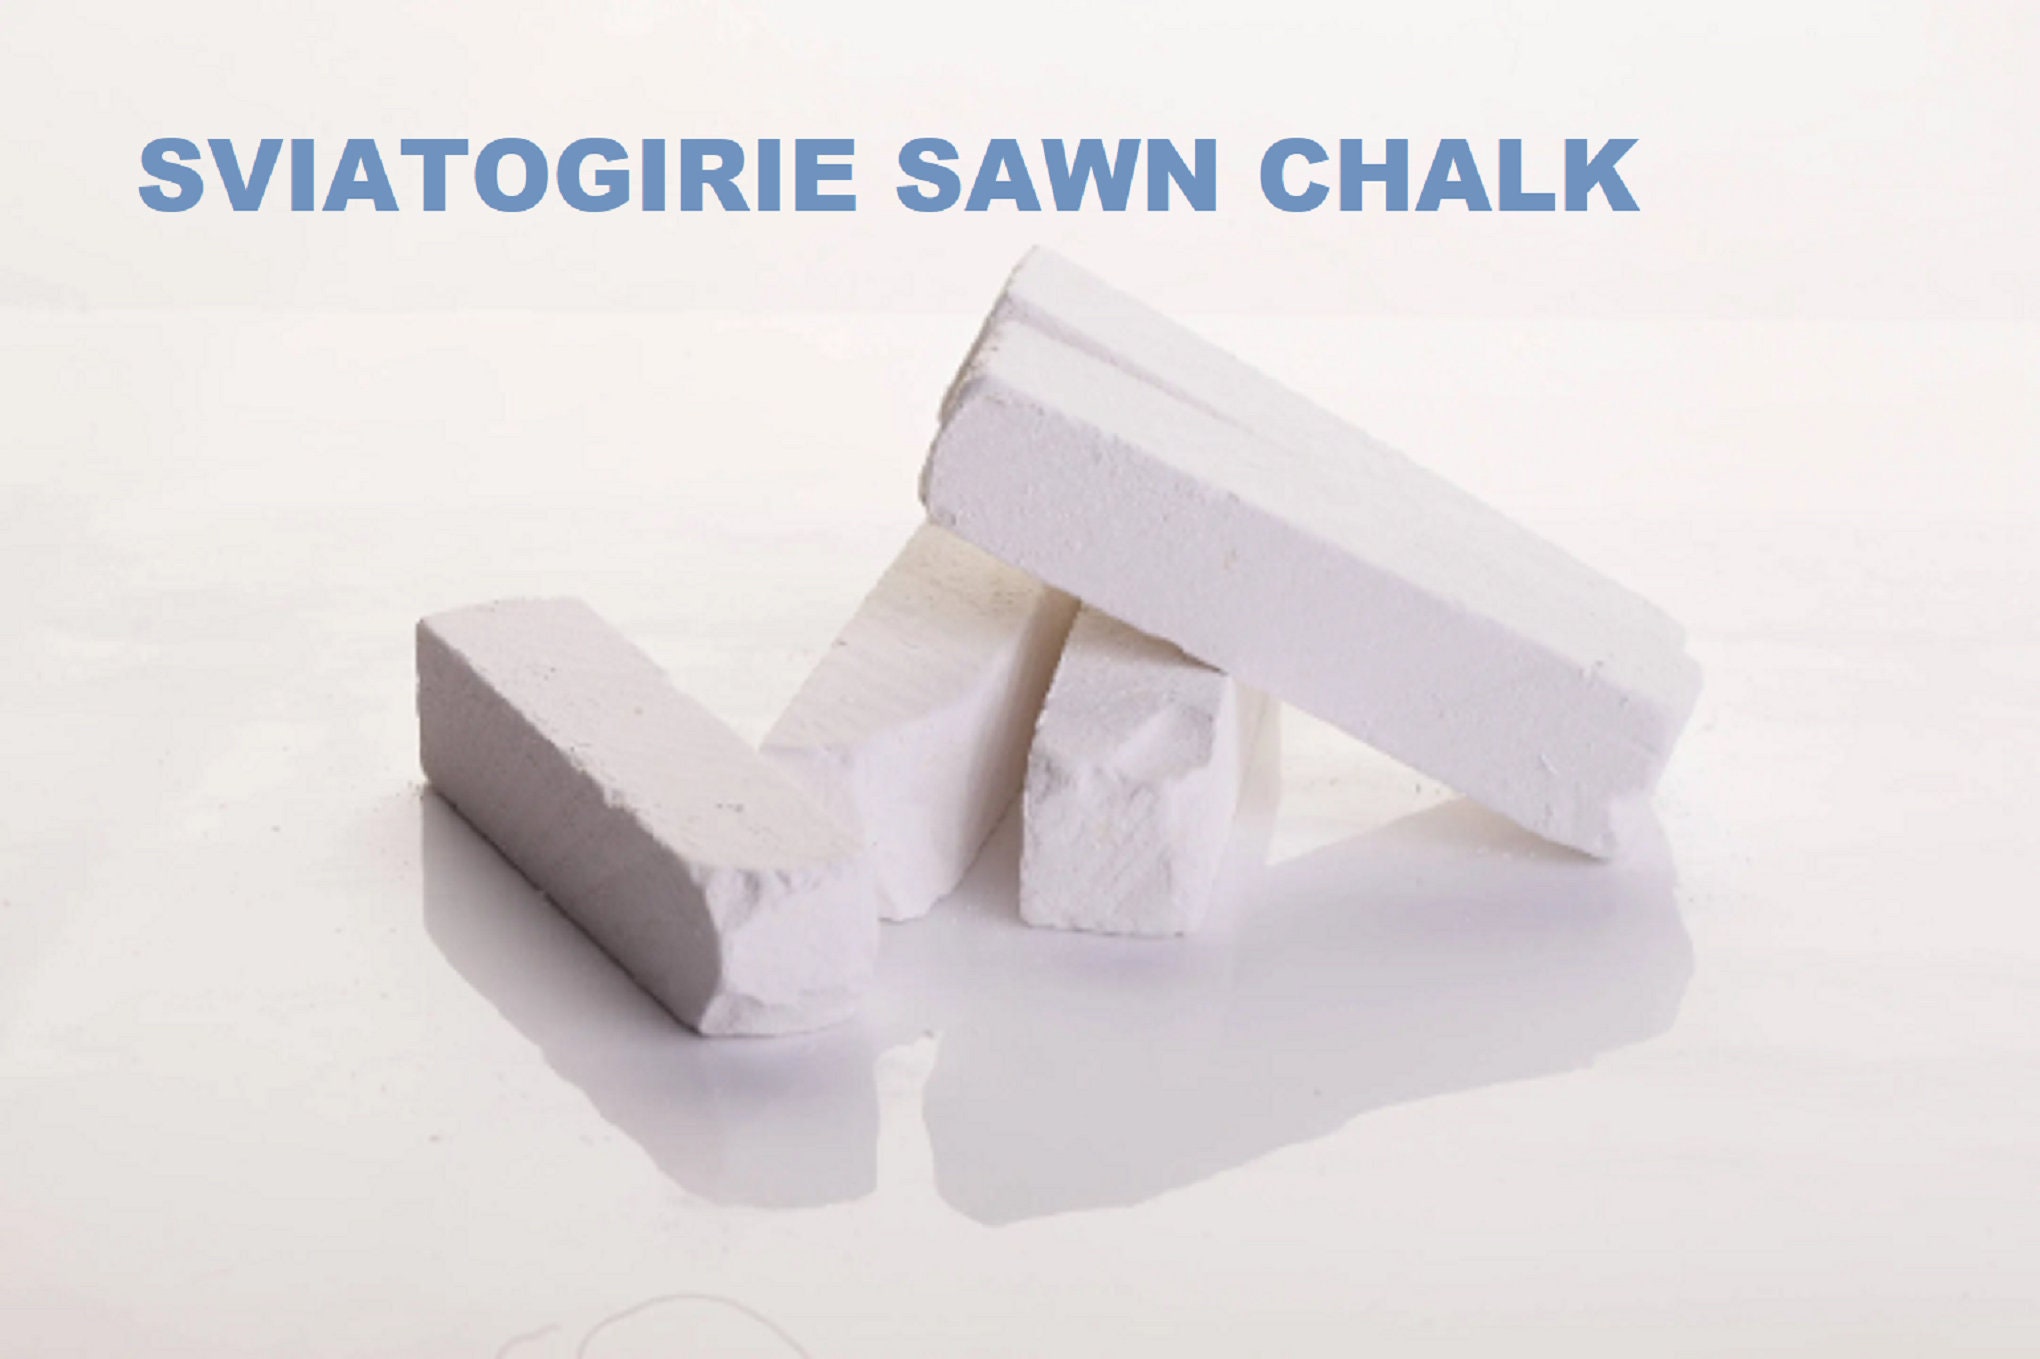 Edible chalk : KRAM edible Chalk chunks (lump) natural for eating